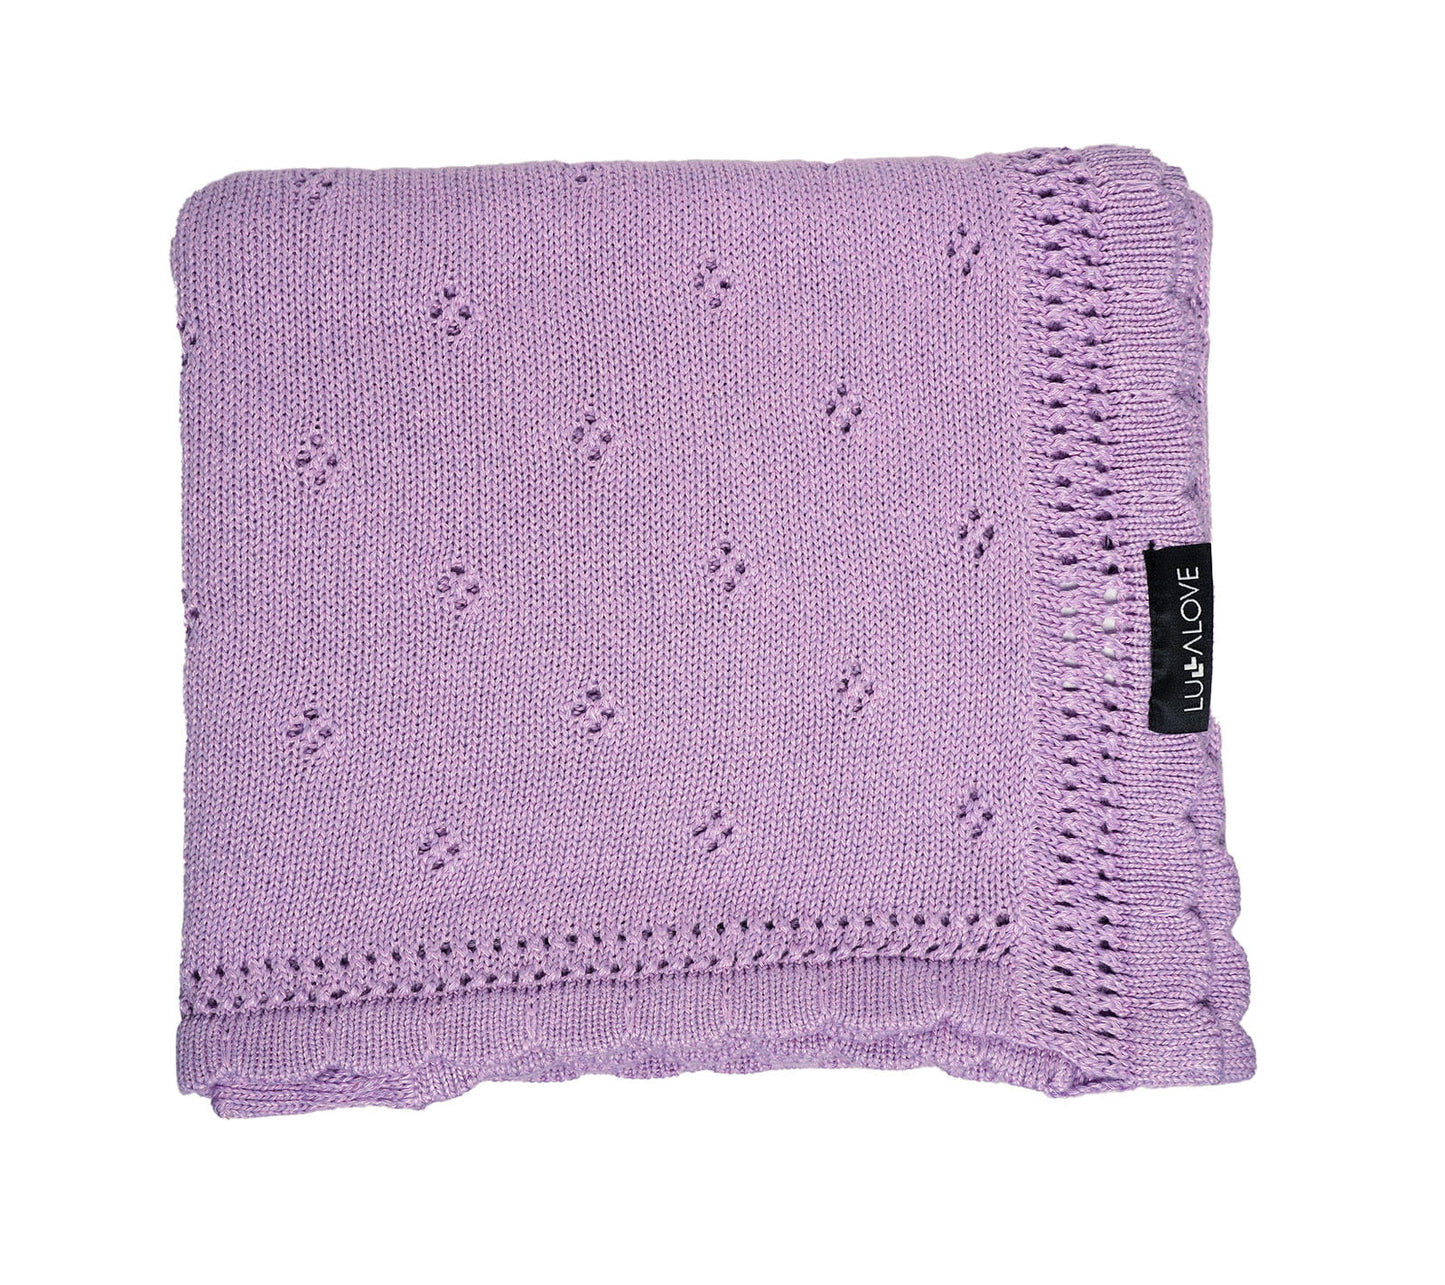 Soft cellular bamboo baby blanket - Lavender - Daisy